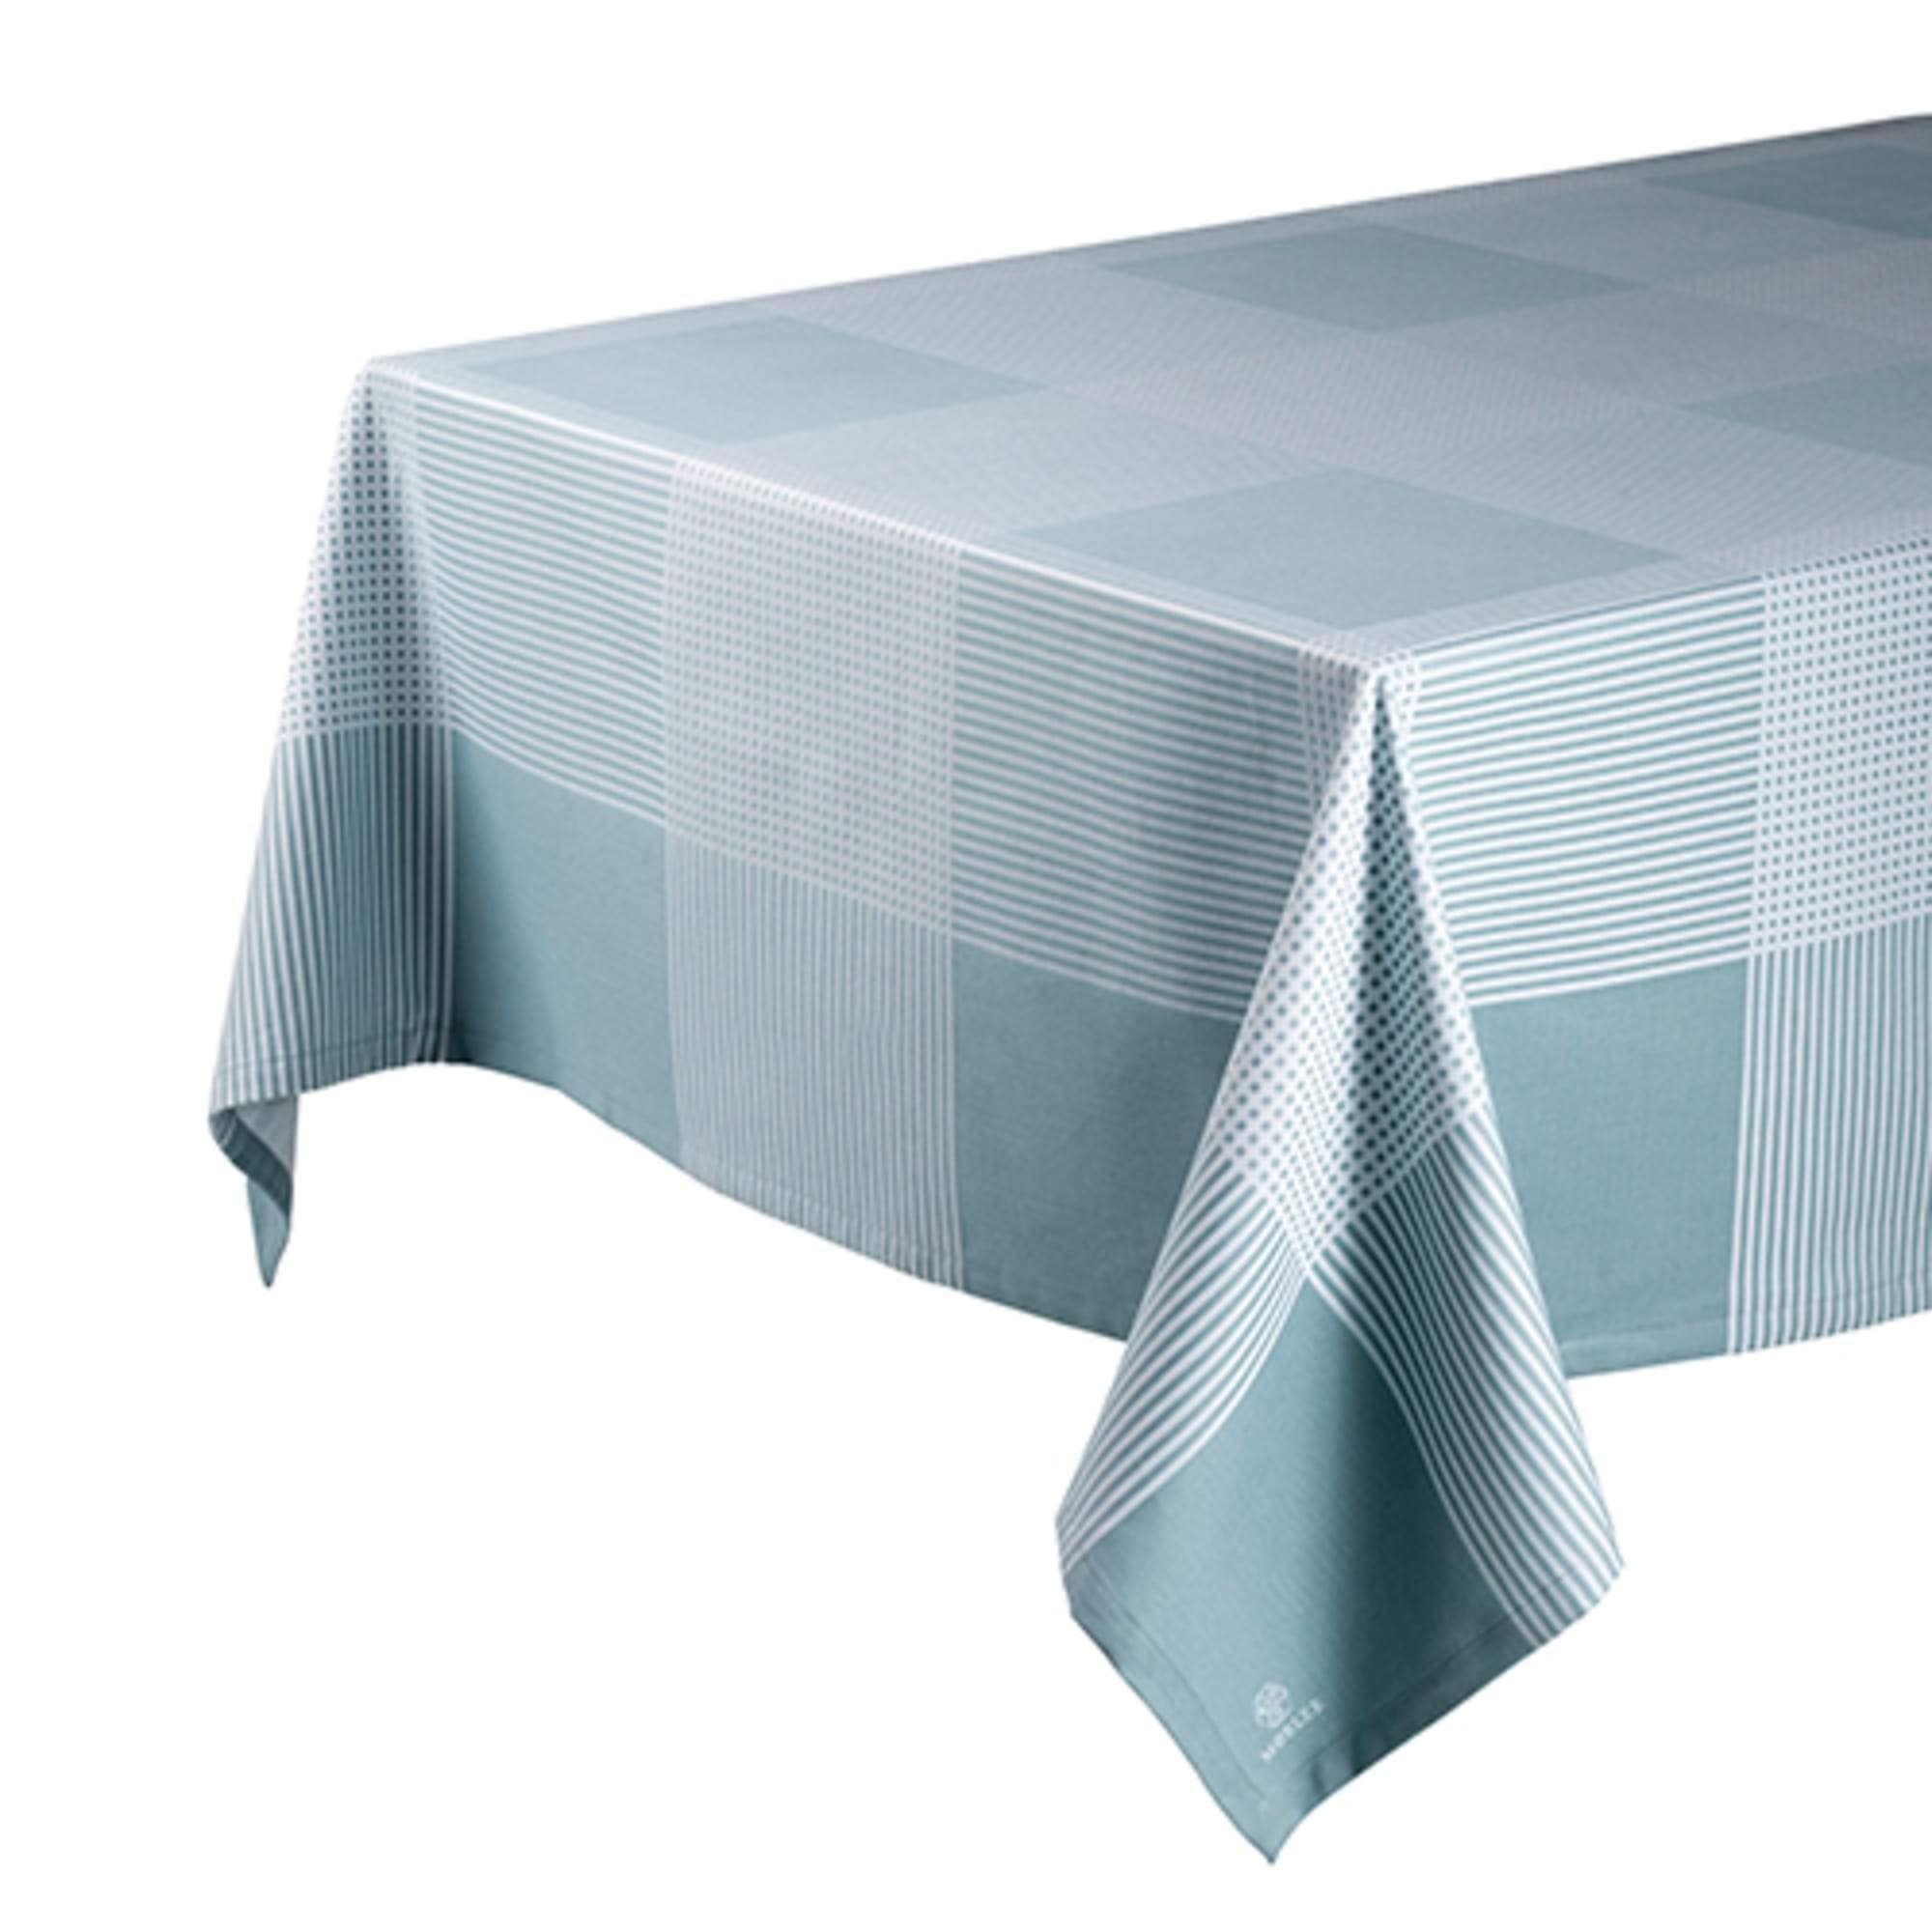 Fdb Møbler R1 Olga Tablecloth Blue, 140x240cm